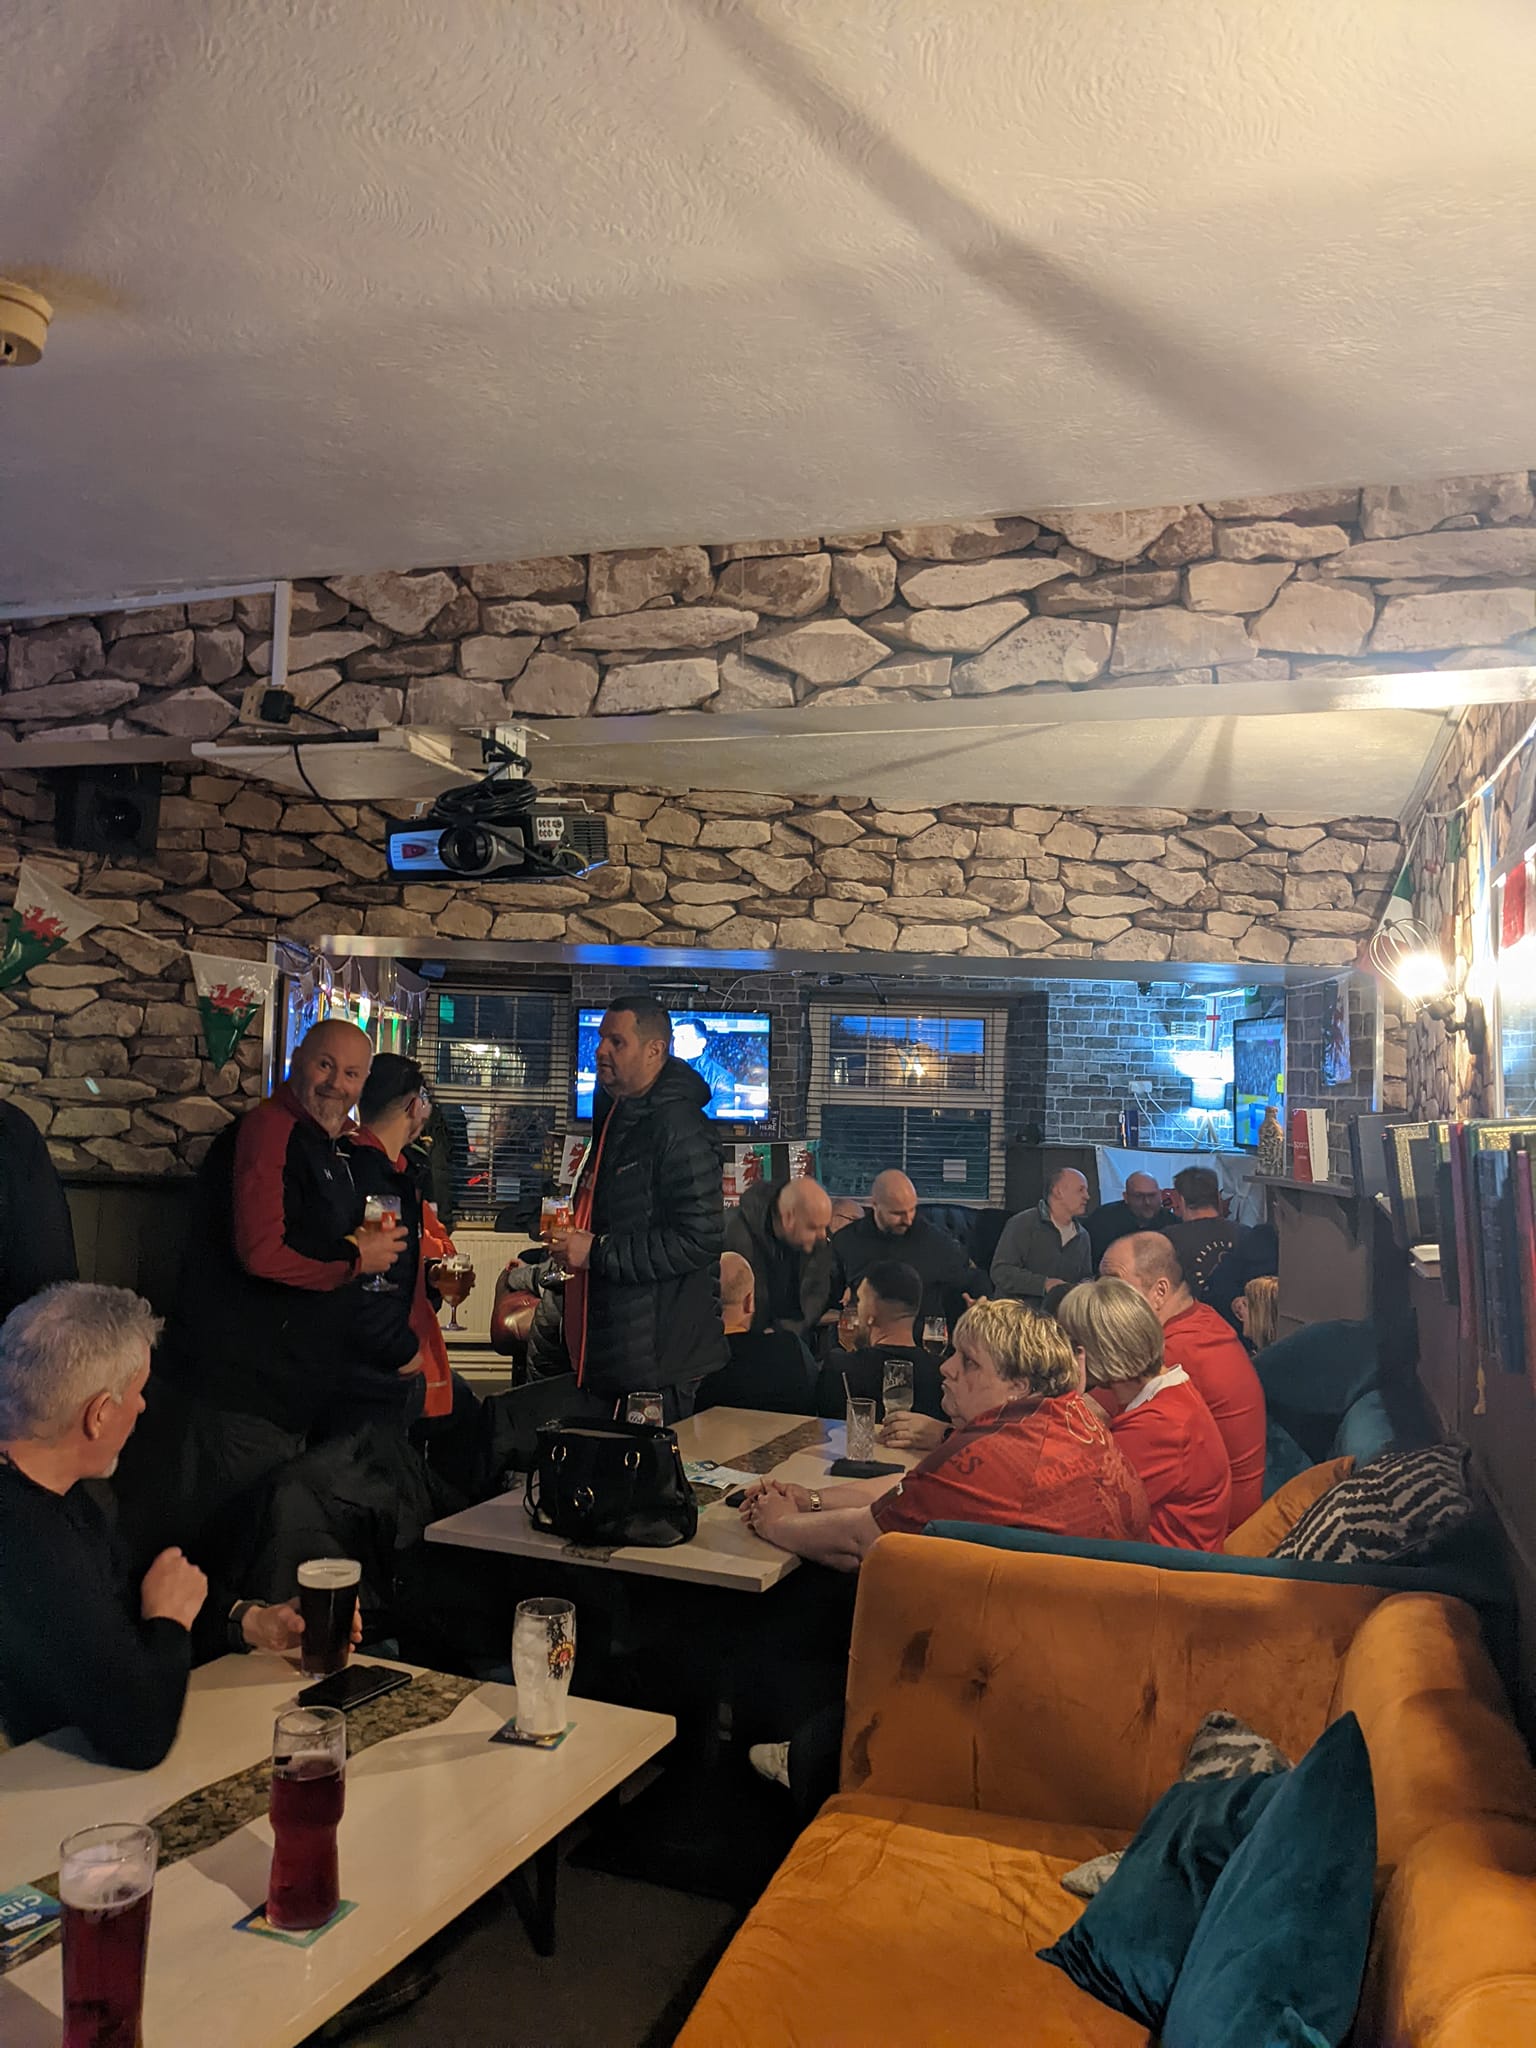 Victoria Inn Bar & restaurant in Holyhead interior